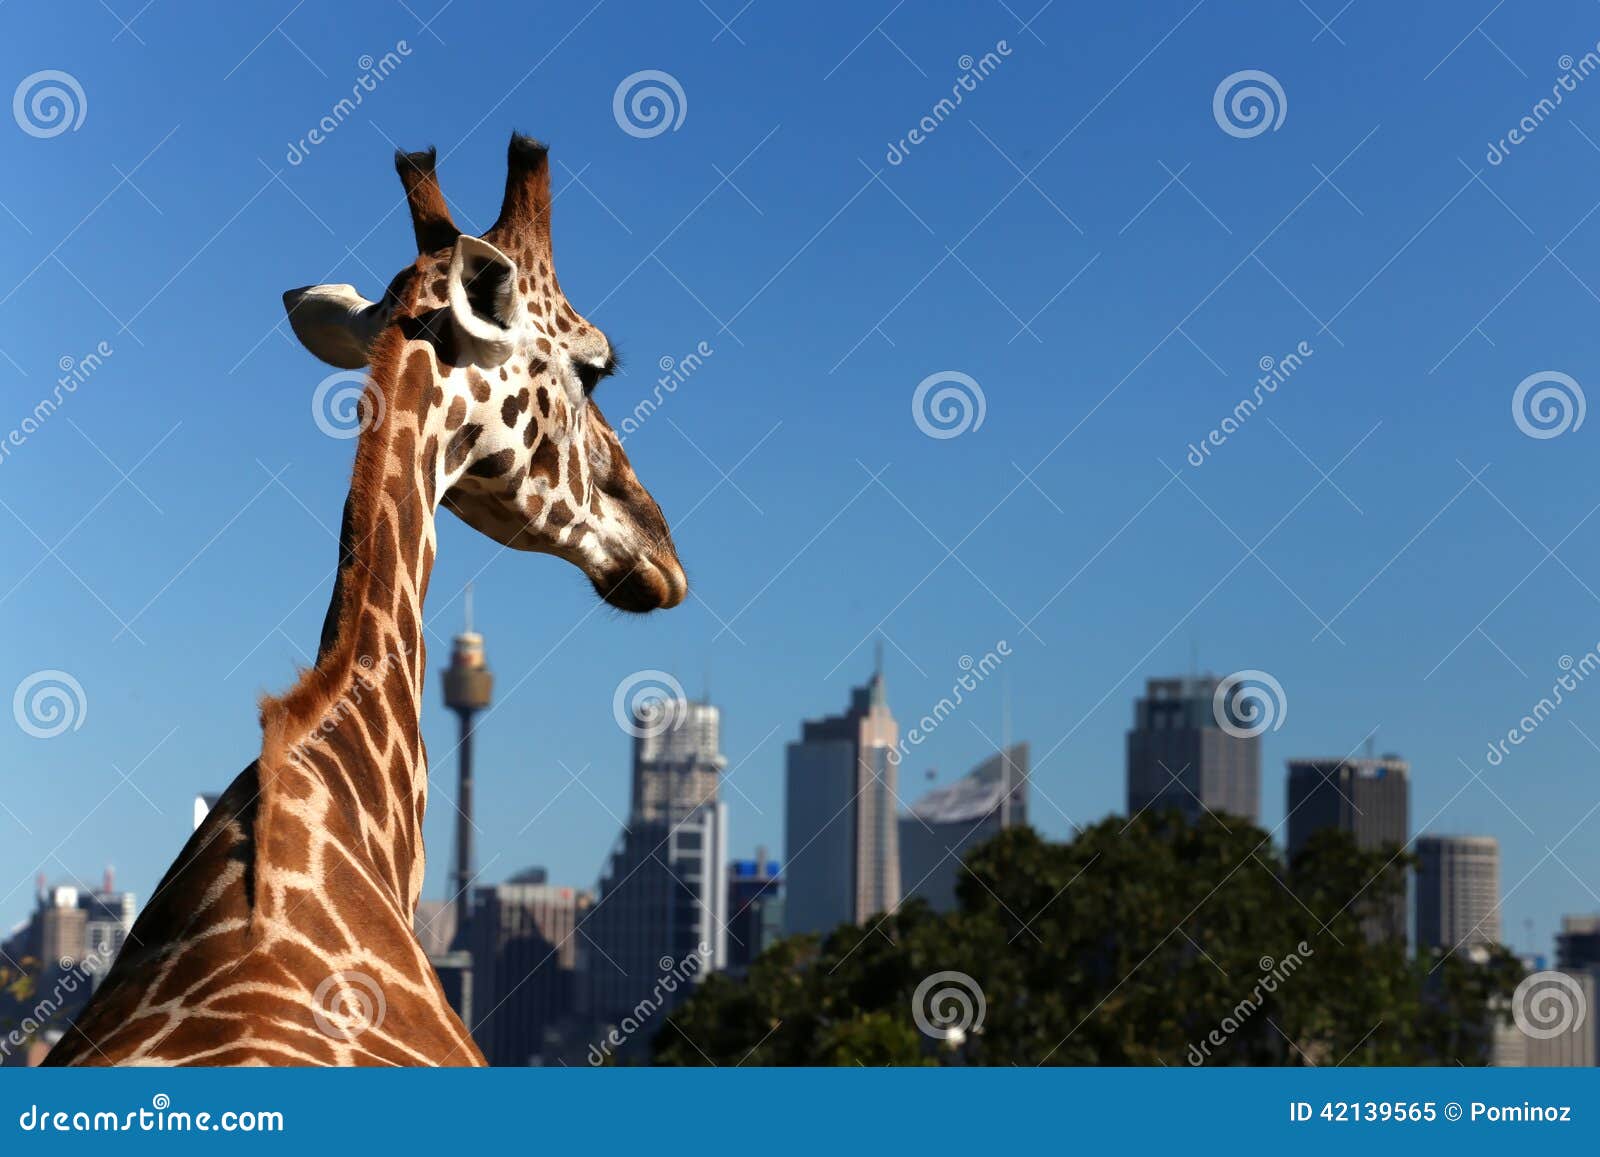 giraffe looks to the city